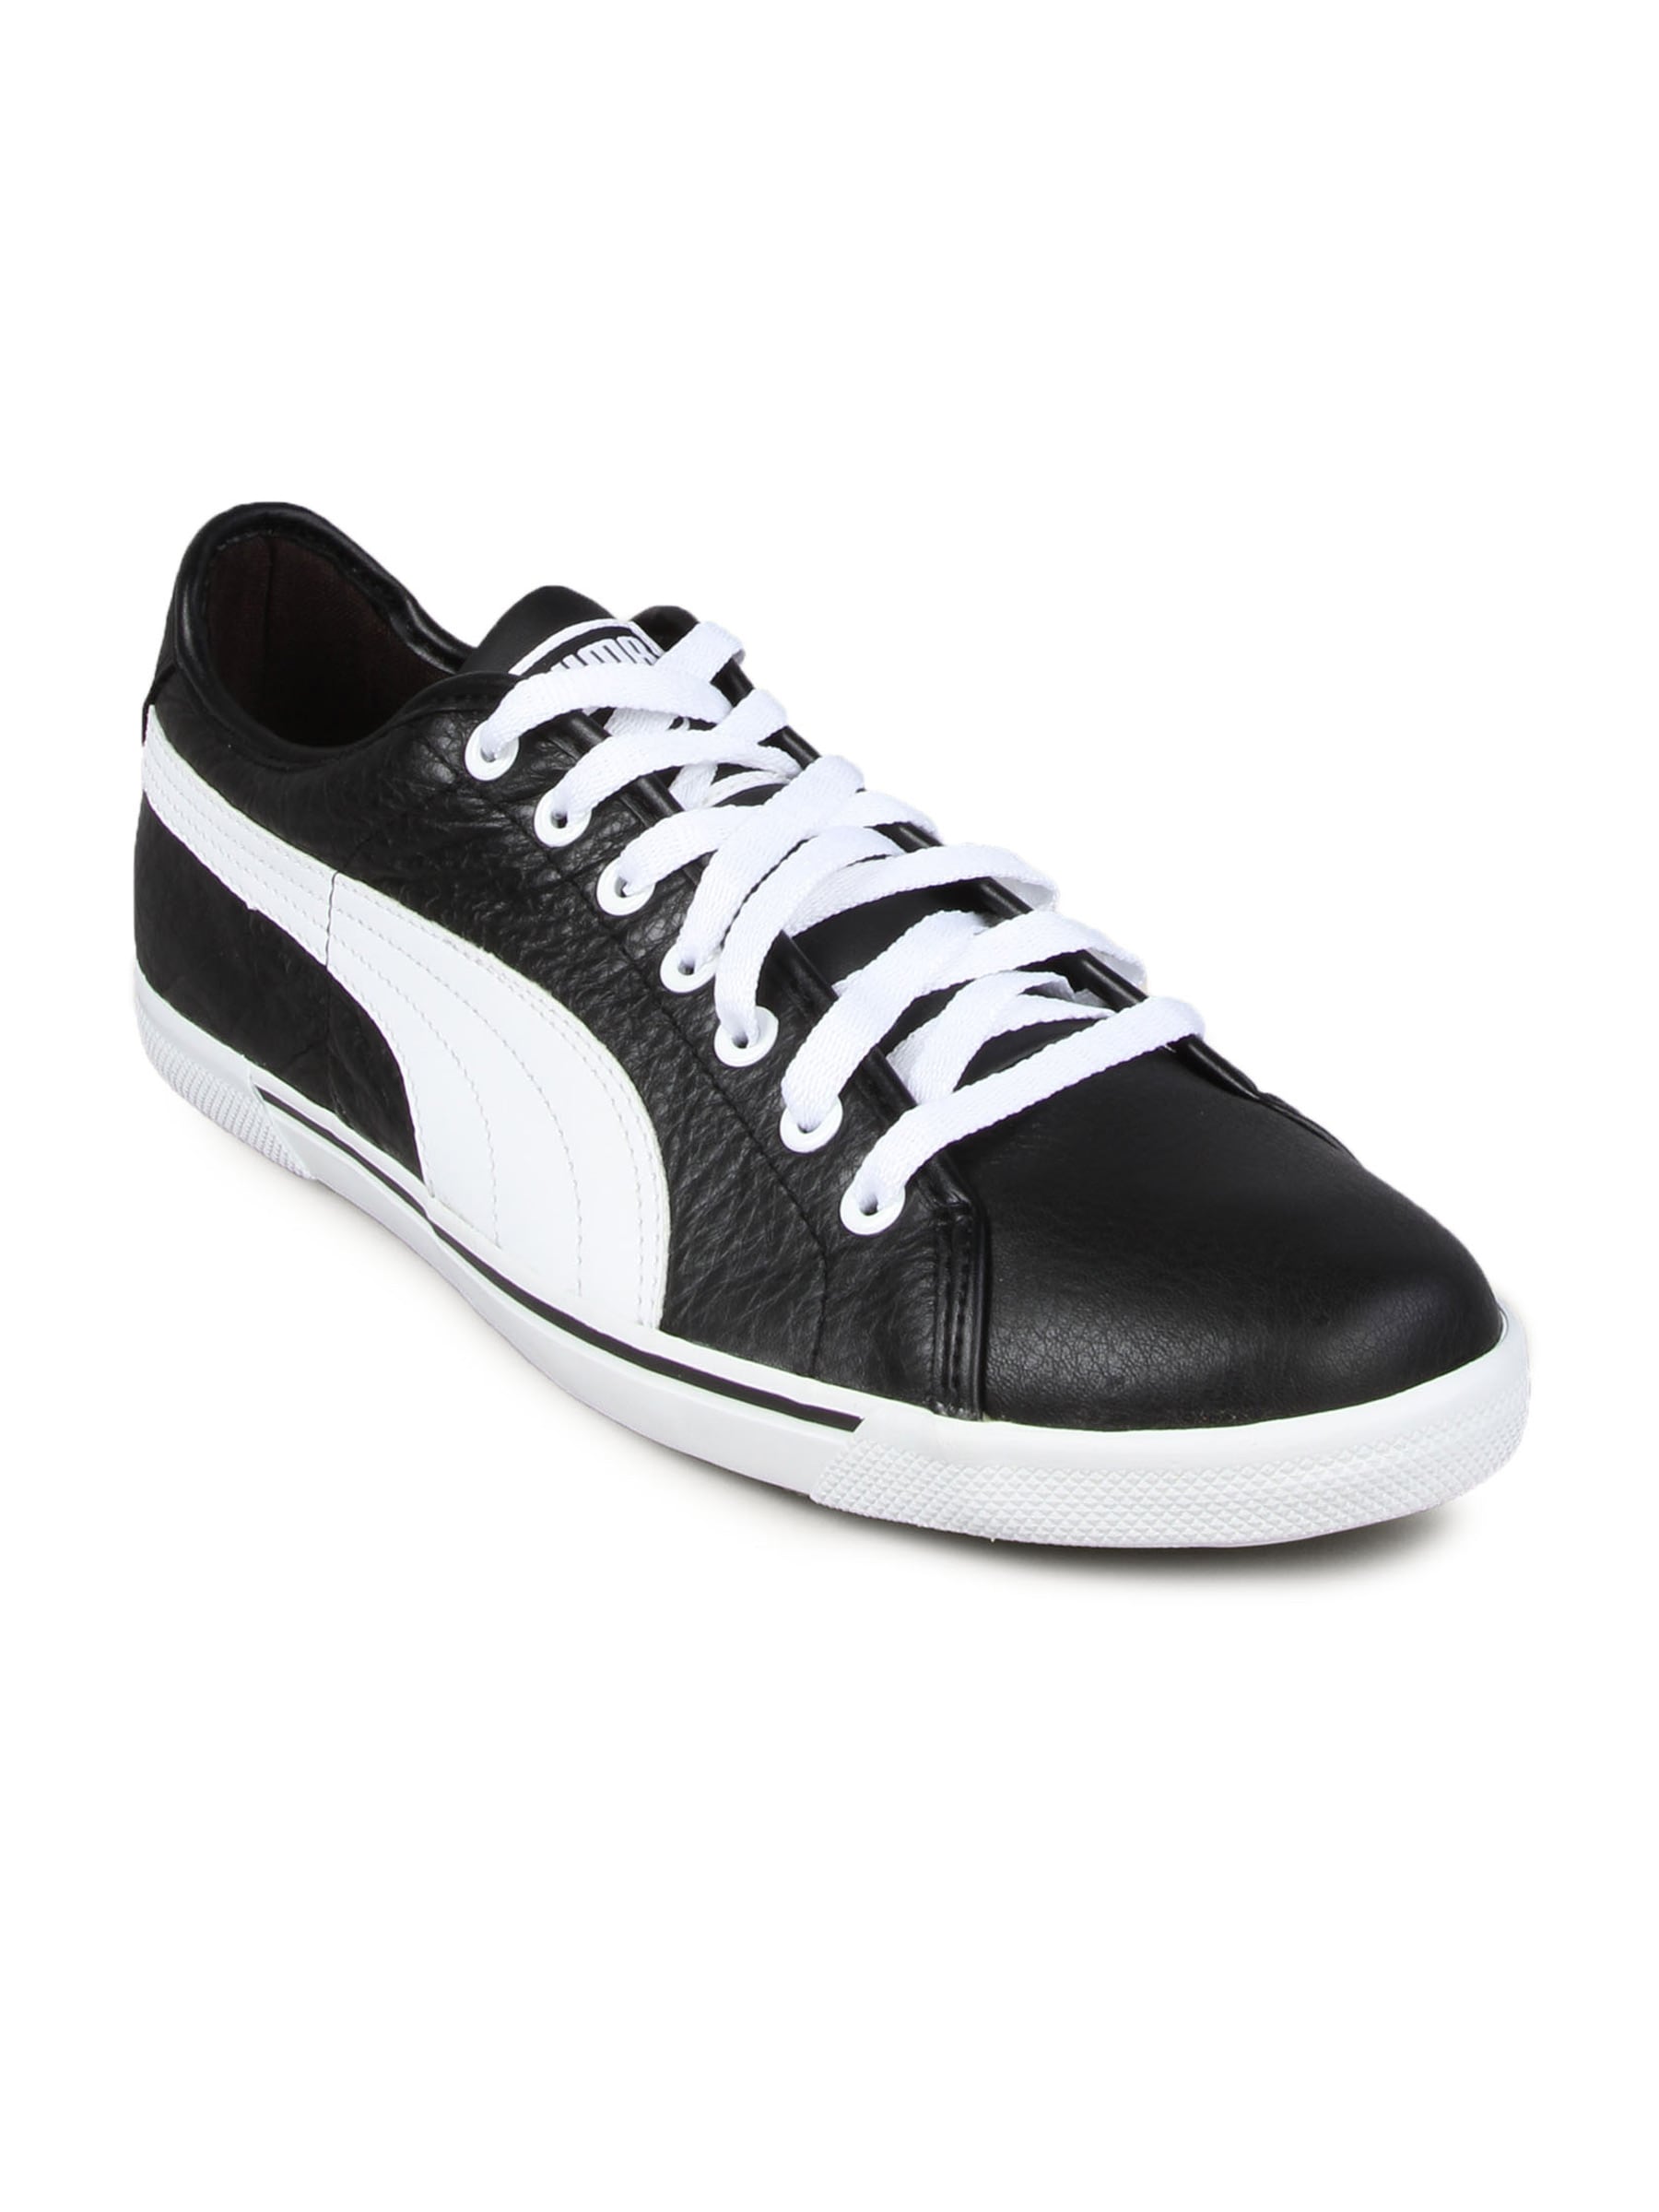 Puma Men's Benecio Leather Black White Shoe